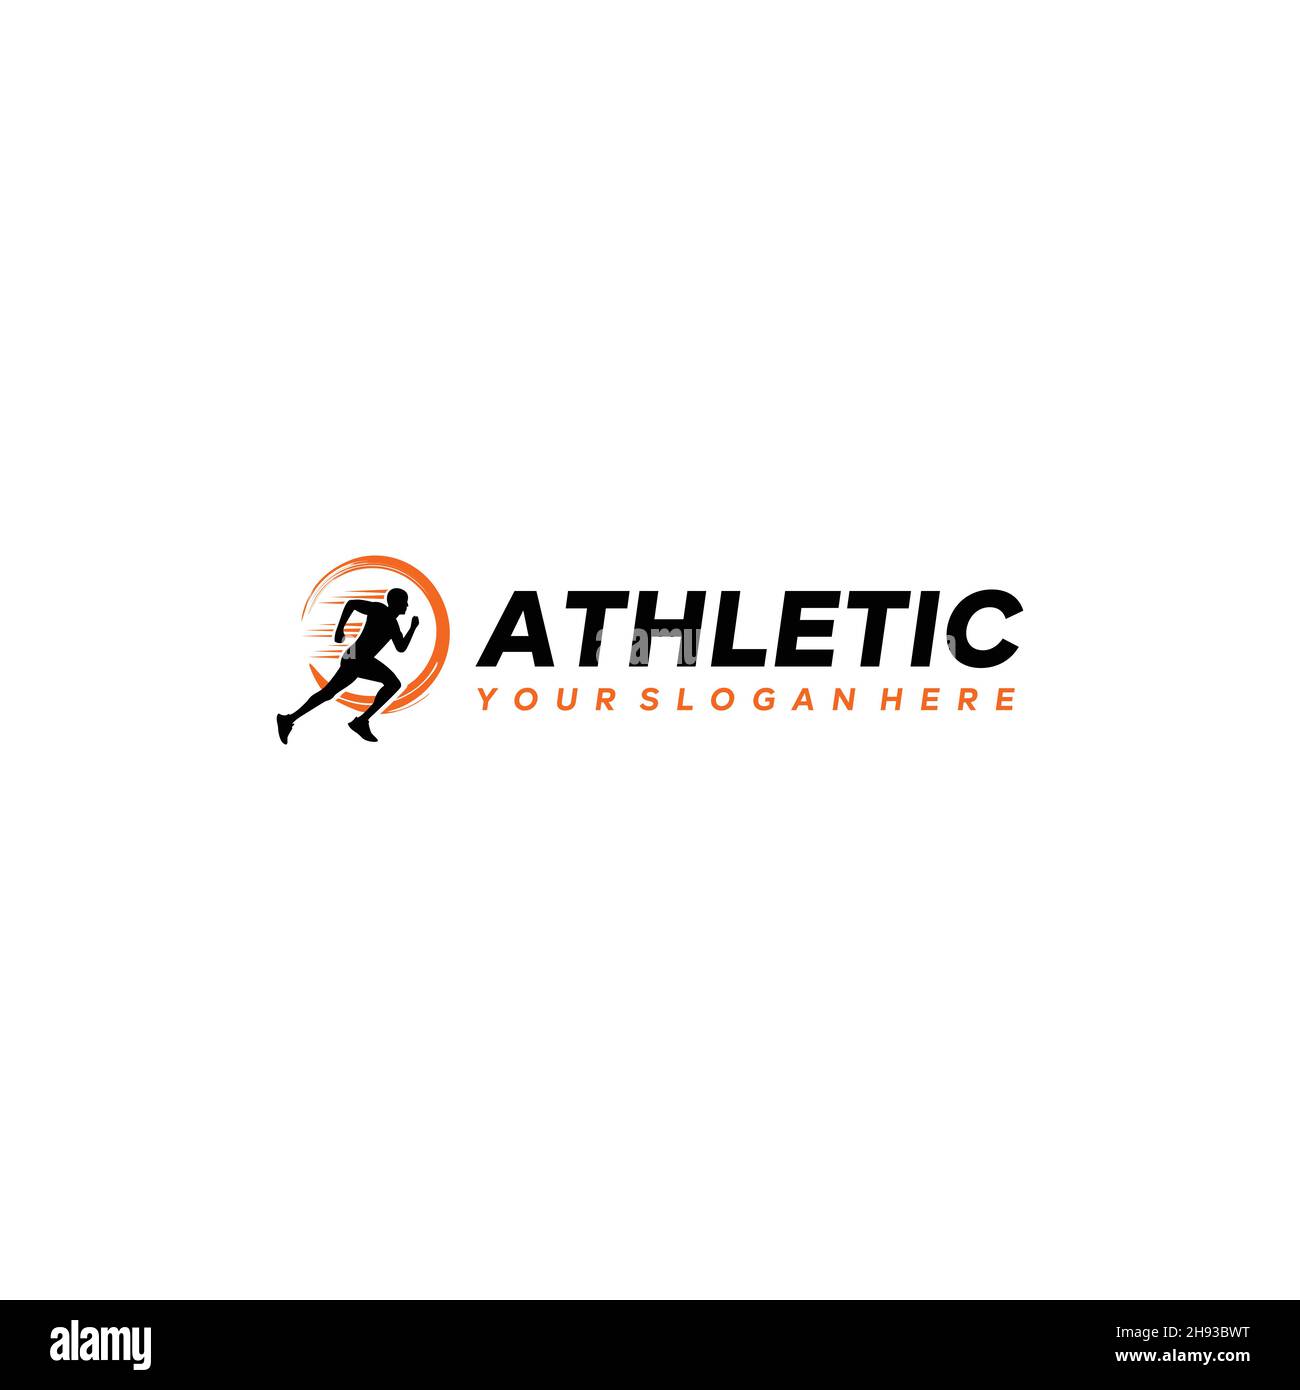 Minimalist Athletic People Running Logo Design 2H93BWT 